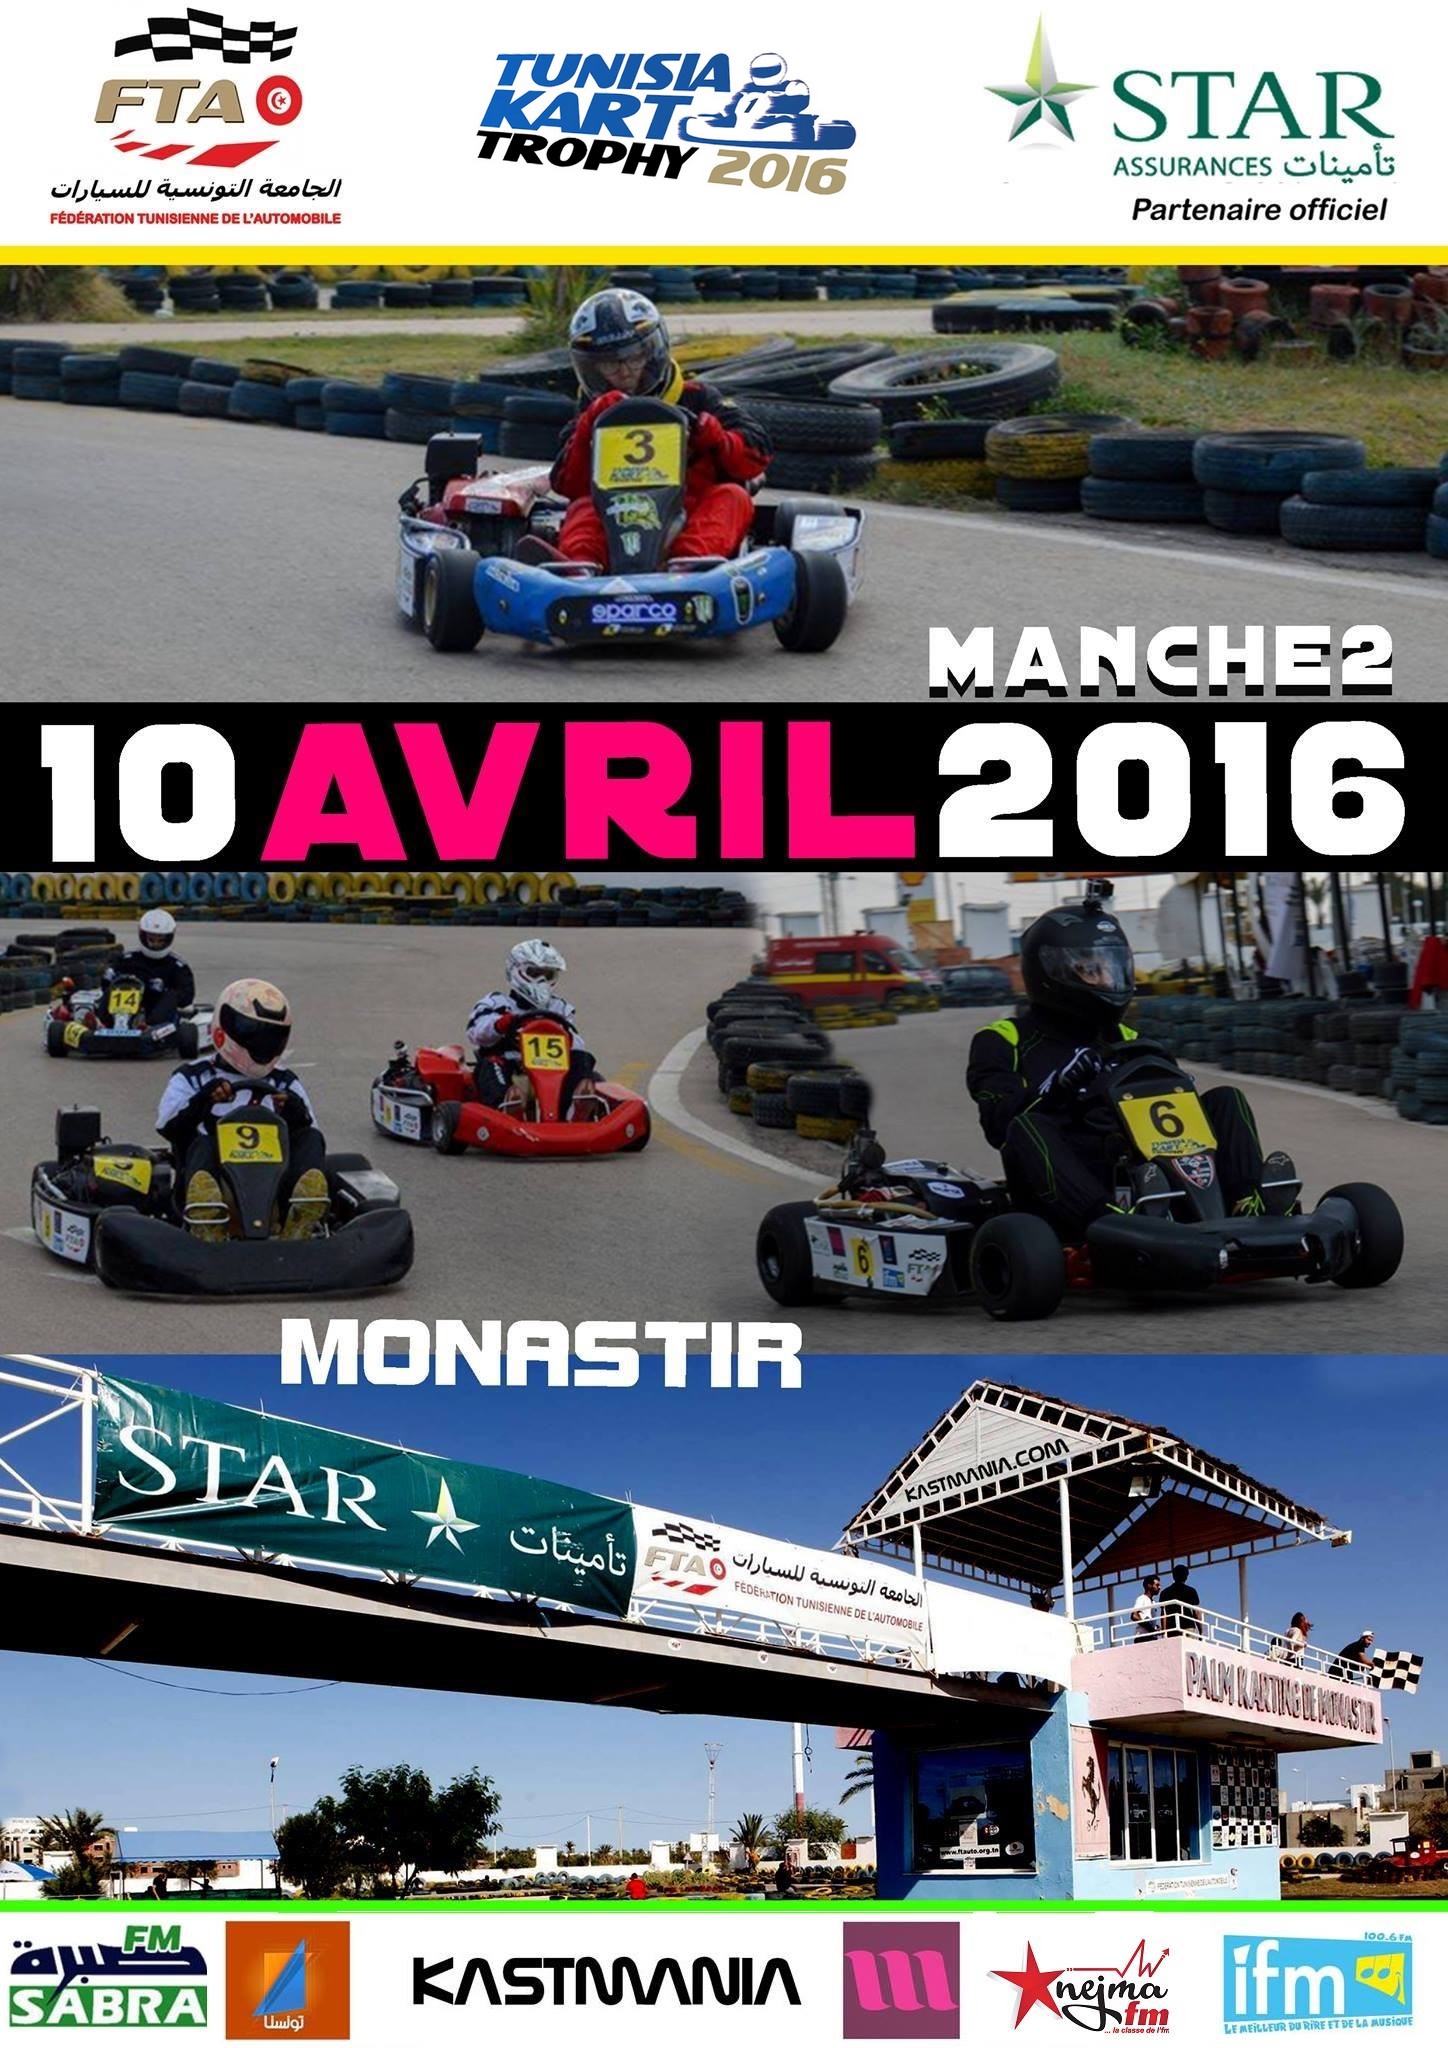 Manche 2 – Tunisia Kart Trophy 2016